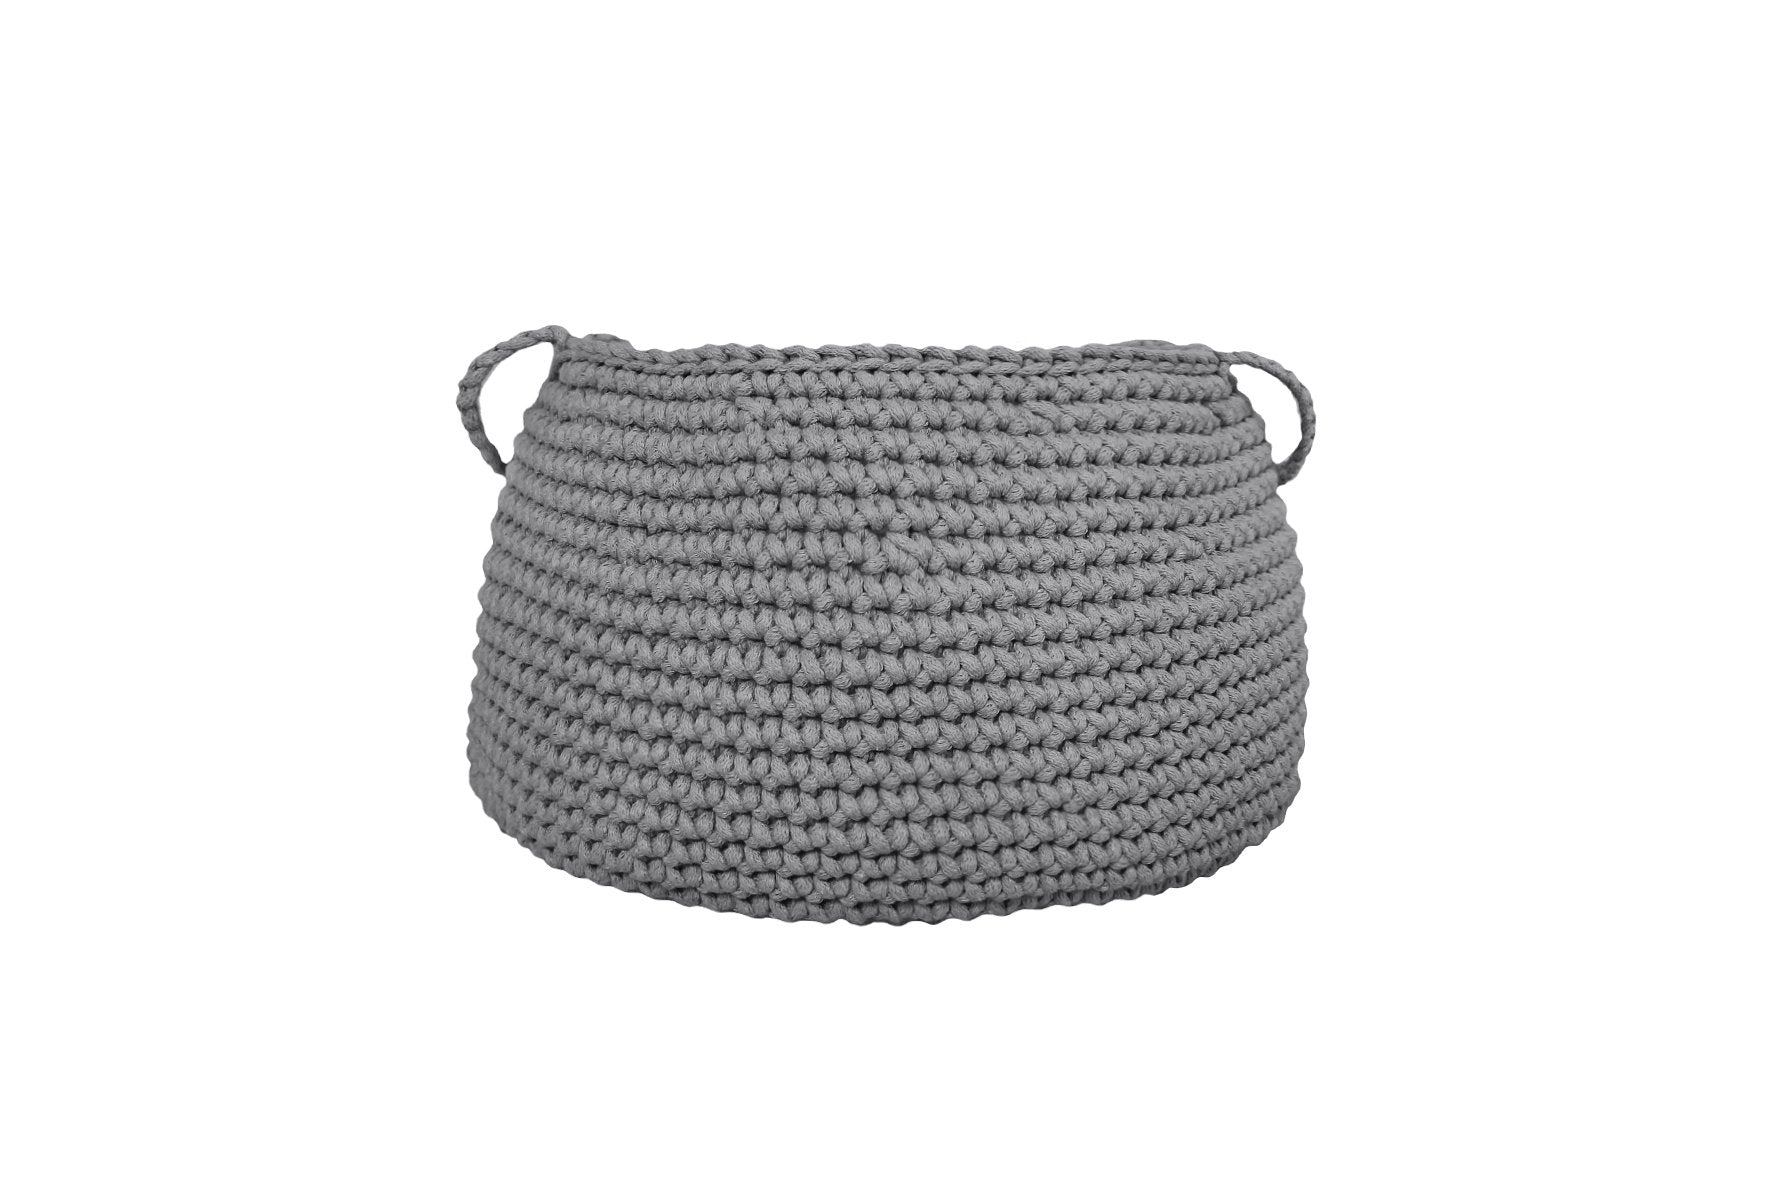 Zuri House Crochet Basket, Size L | DARK GREY